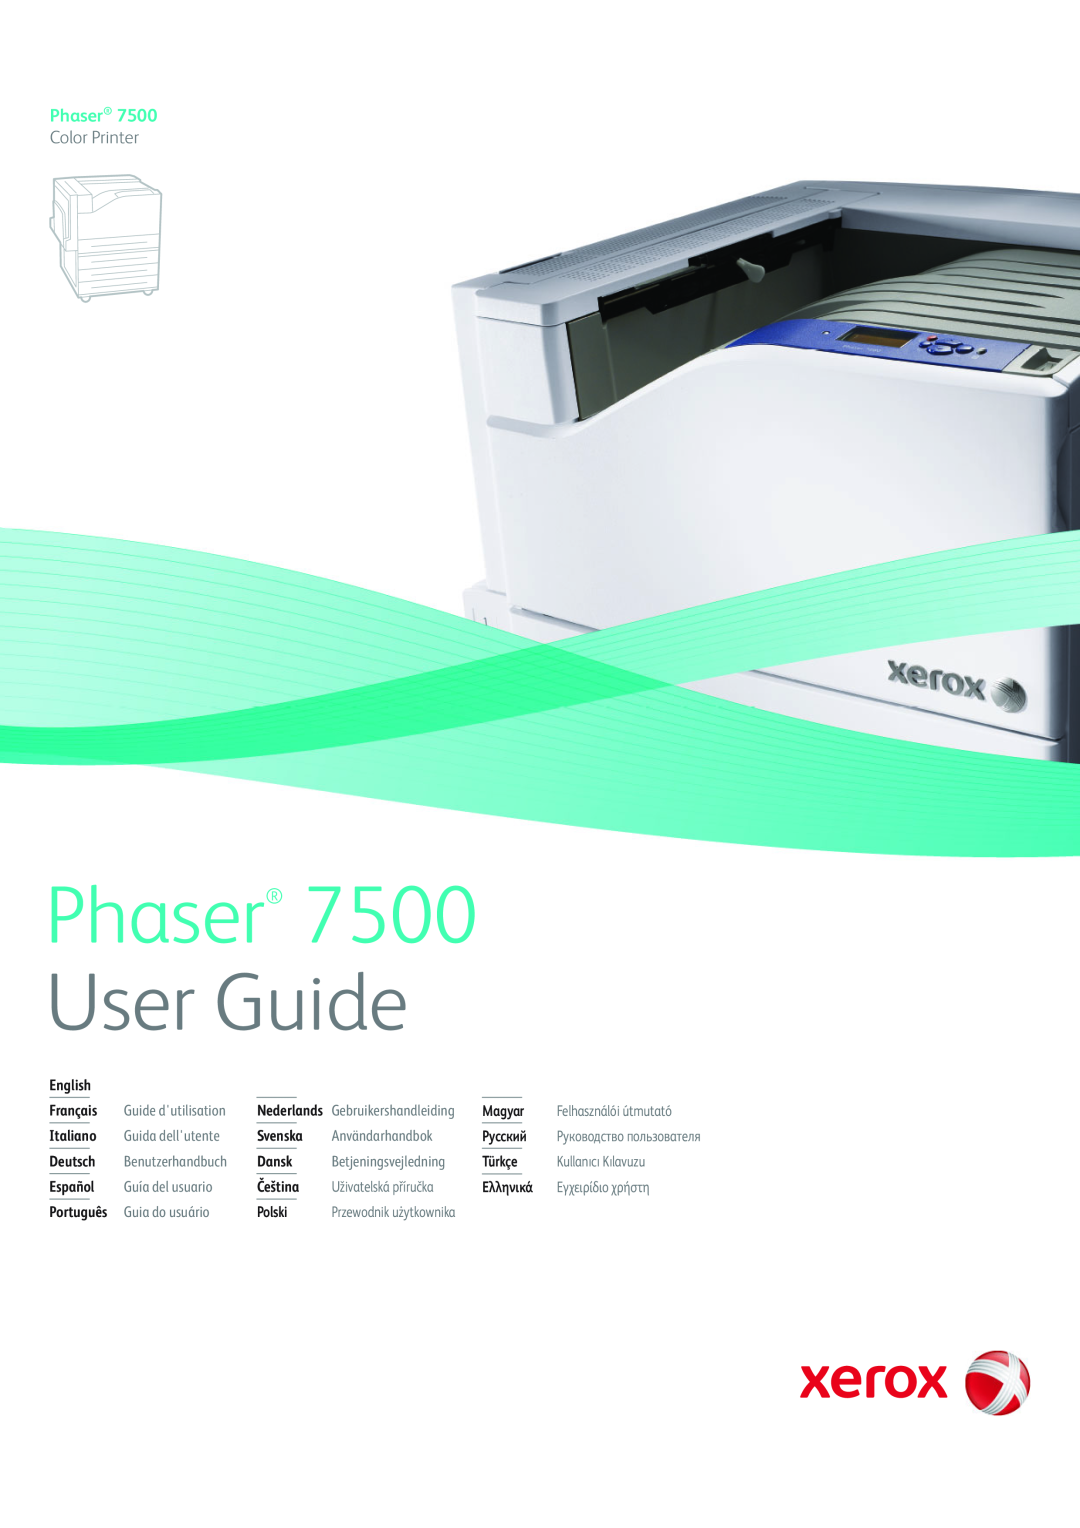 Xerox 7500 color printer manual Phaser, User Guide, Color Printer, English, Français, Magyar, Italiano, Svenska, Русский 